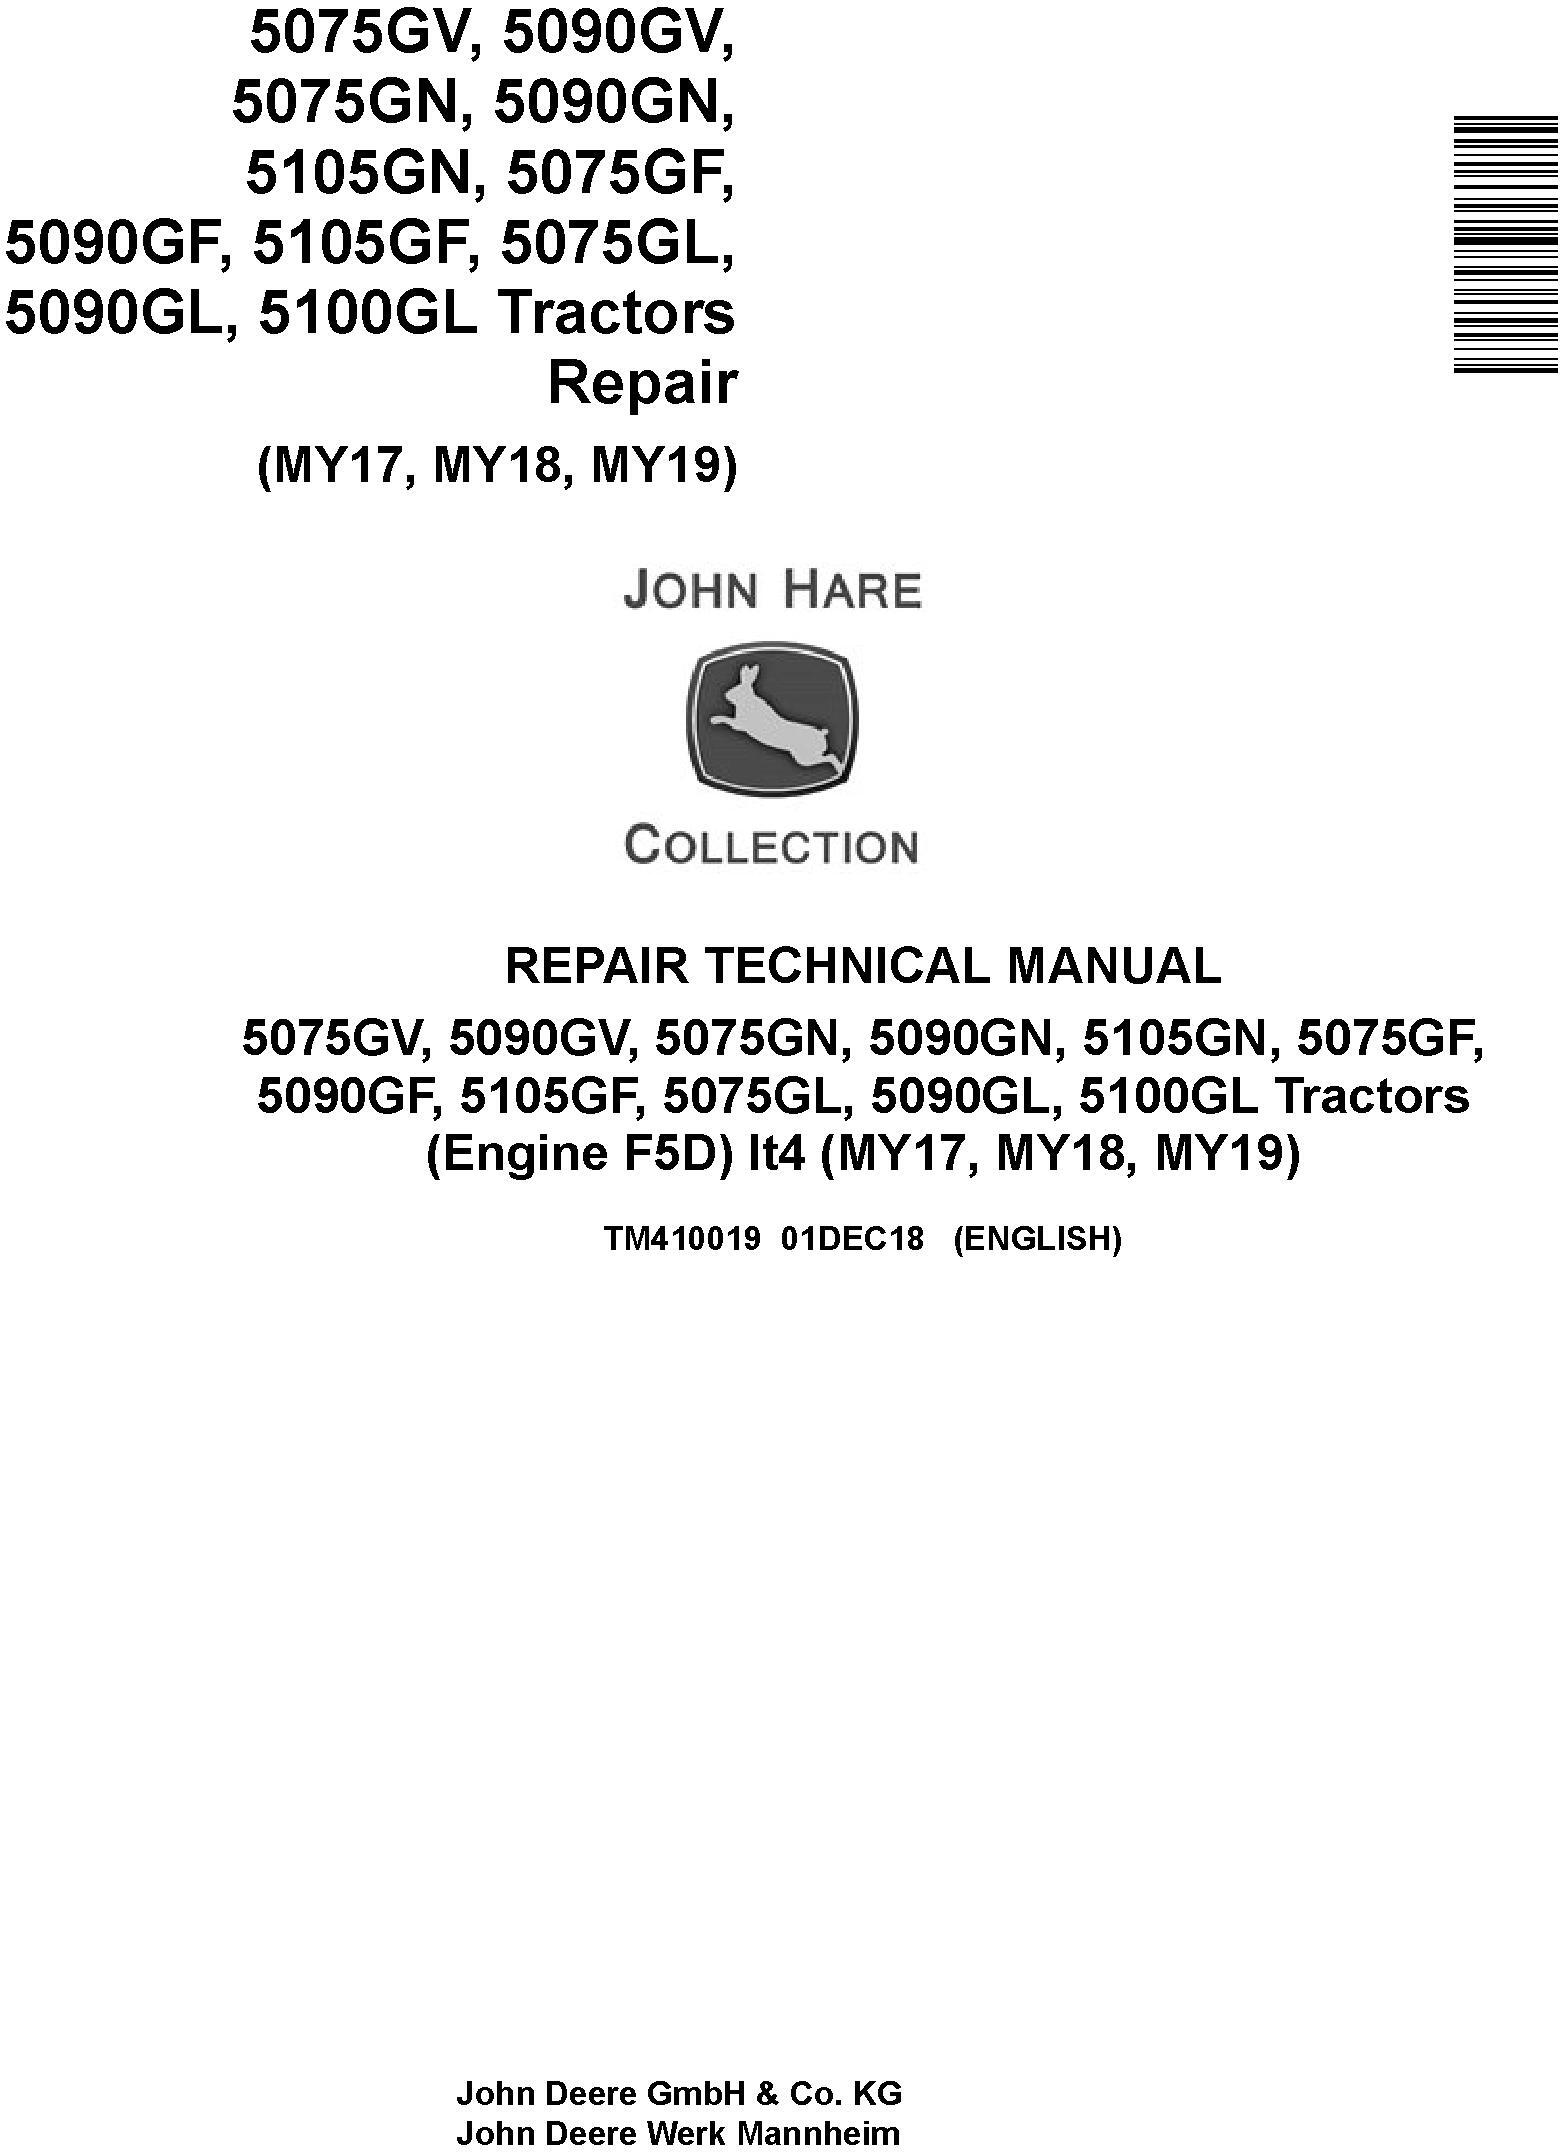 John Deere 5075GF/L/N/V, 5090GF/L/N/V, 5100GL, 5105GF/N Tractors Repair Technical Manual (TM410019) - 19116